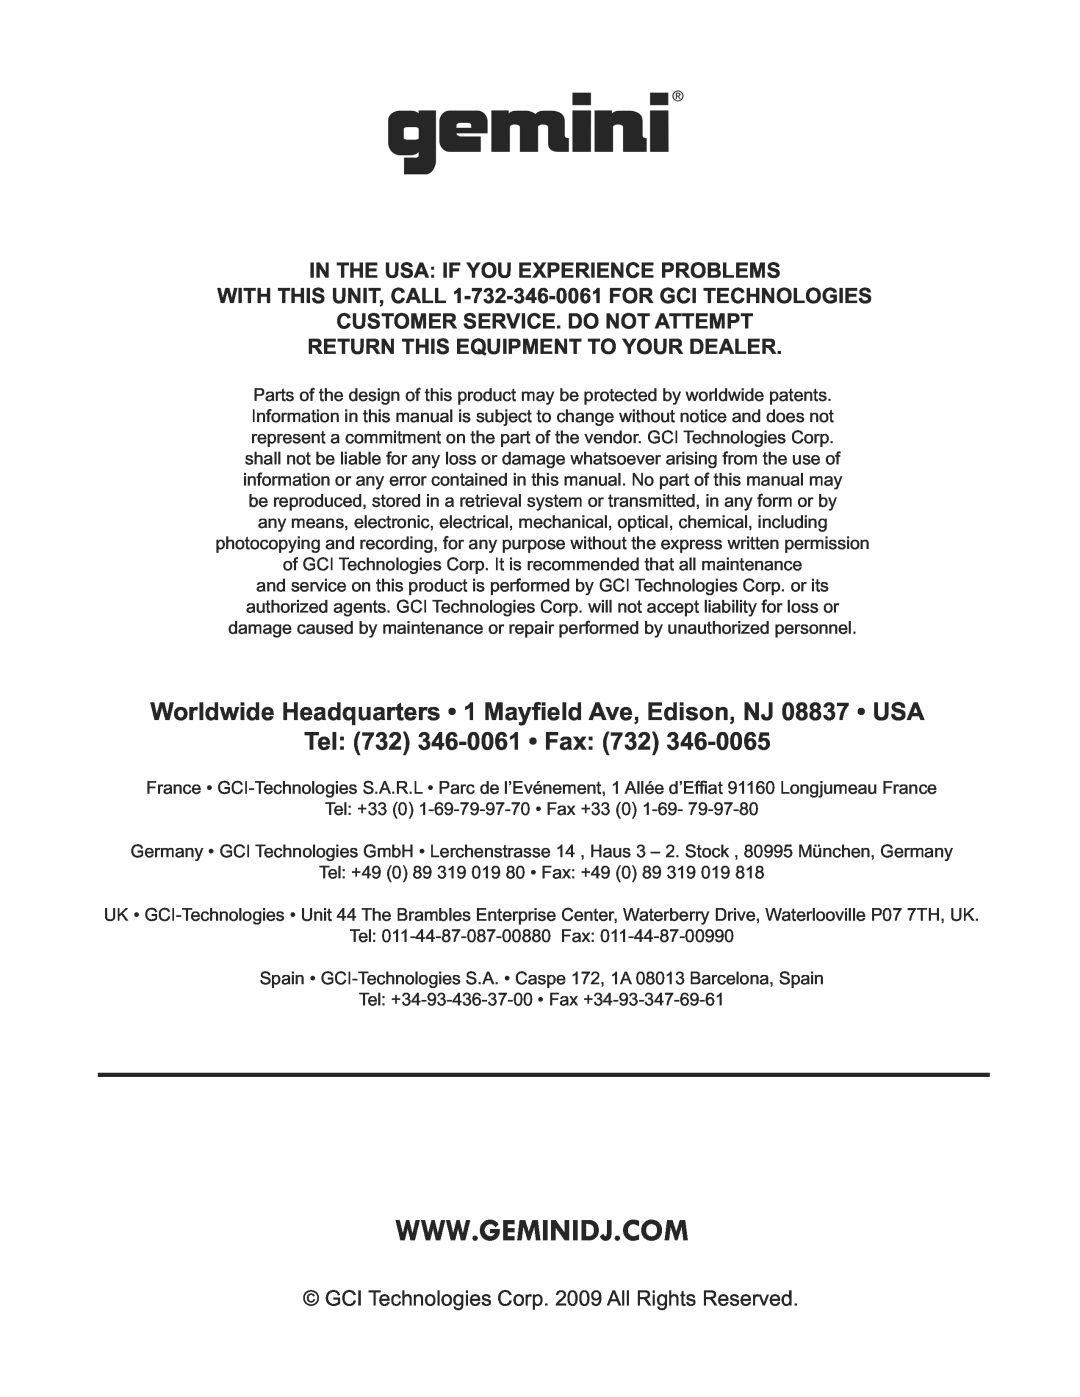 Gemini MM-4000 manual Worldwide Headquarters 1 Mayfield Ave, Edison, NJ 08837 USA, Tel 732 346-0061 Fax 